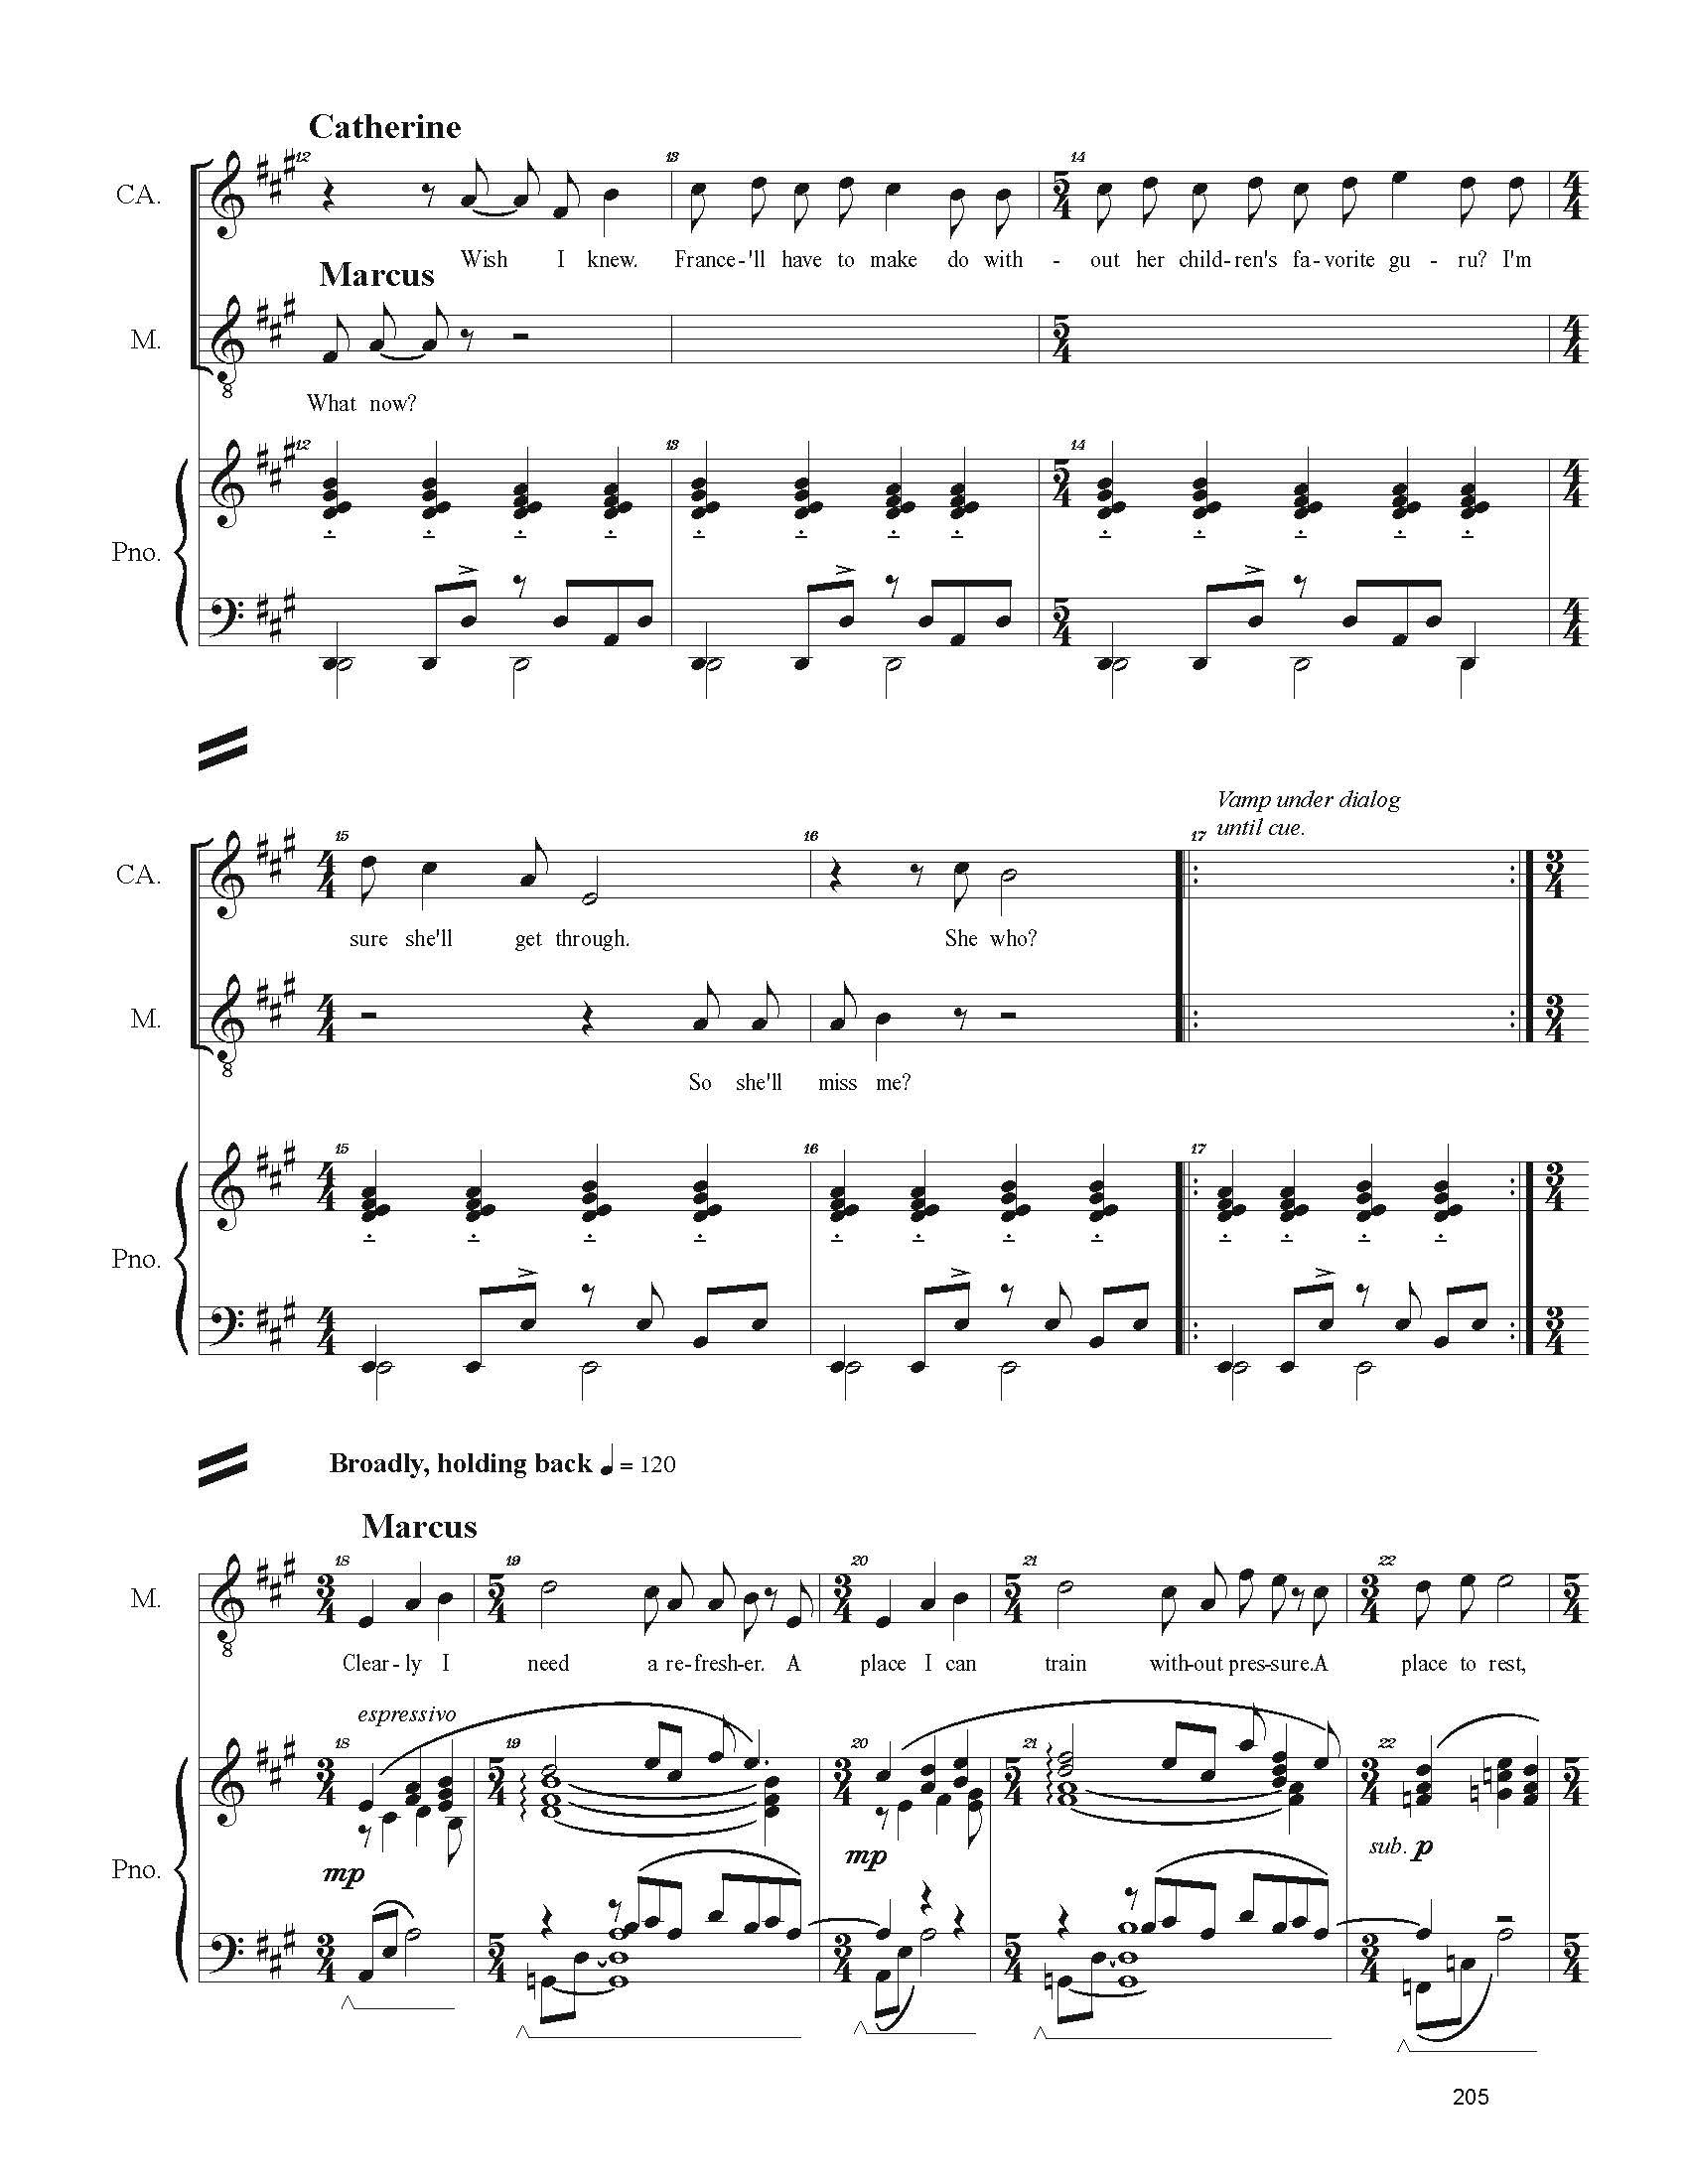 FULL PIANO VOCAL SCORE DRAFT 1 - Score_Page_205.jpg